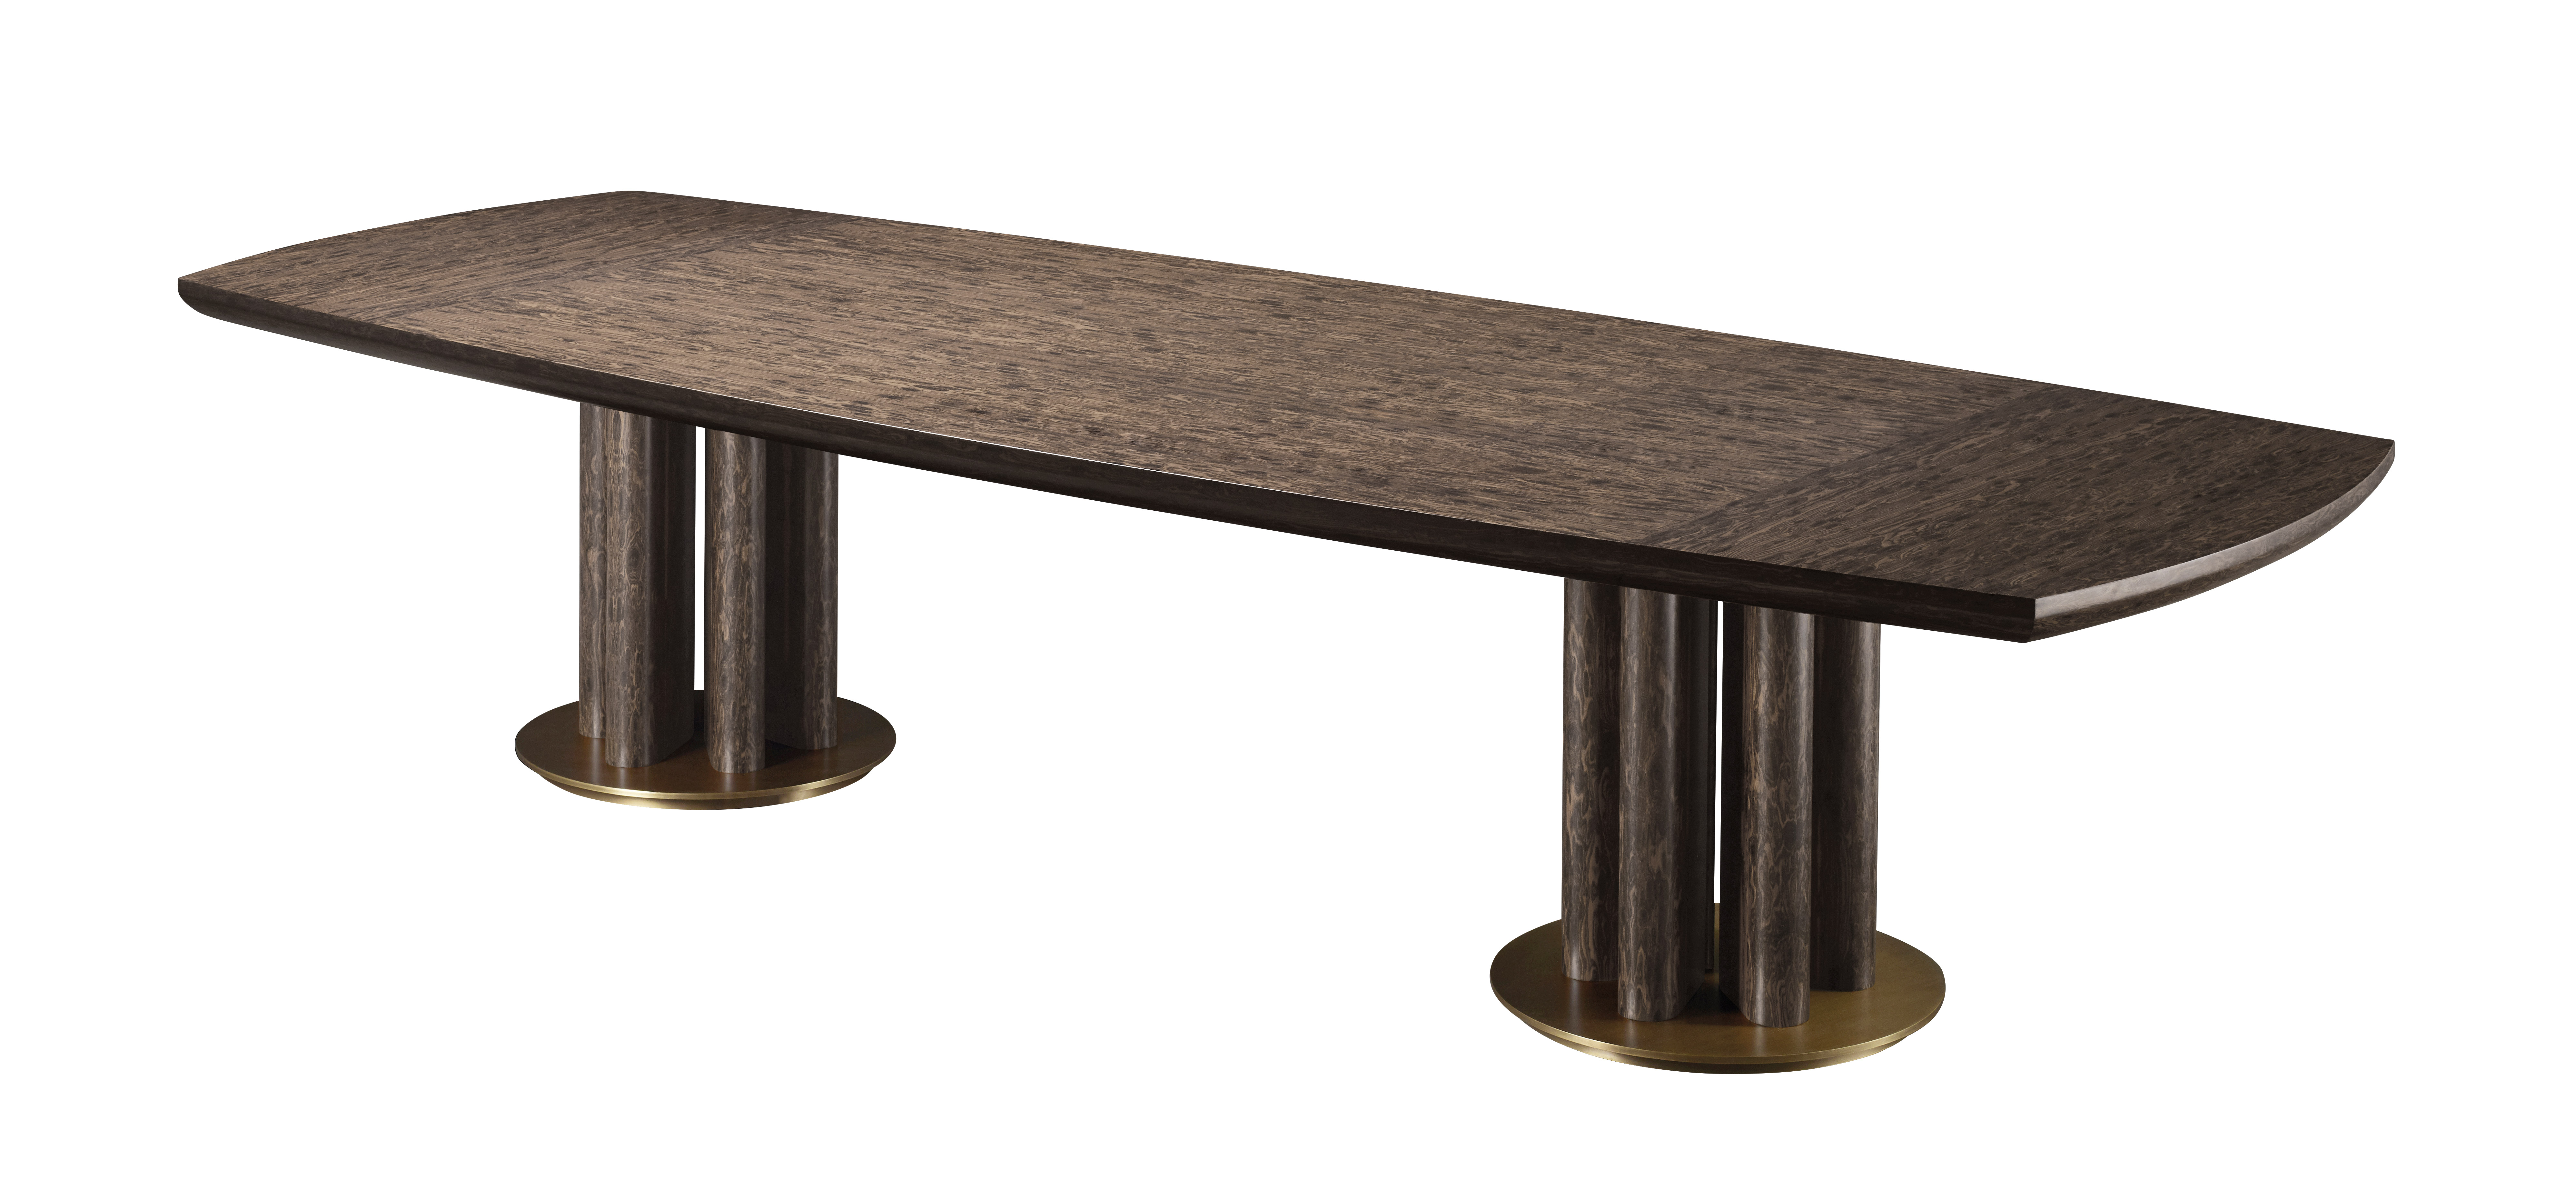 /mediaOrazio是一款以青铜和实木制成的餐桌，属于Promemoria%20Amaranthine%20Tales系列%20|%20Promemoria